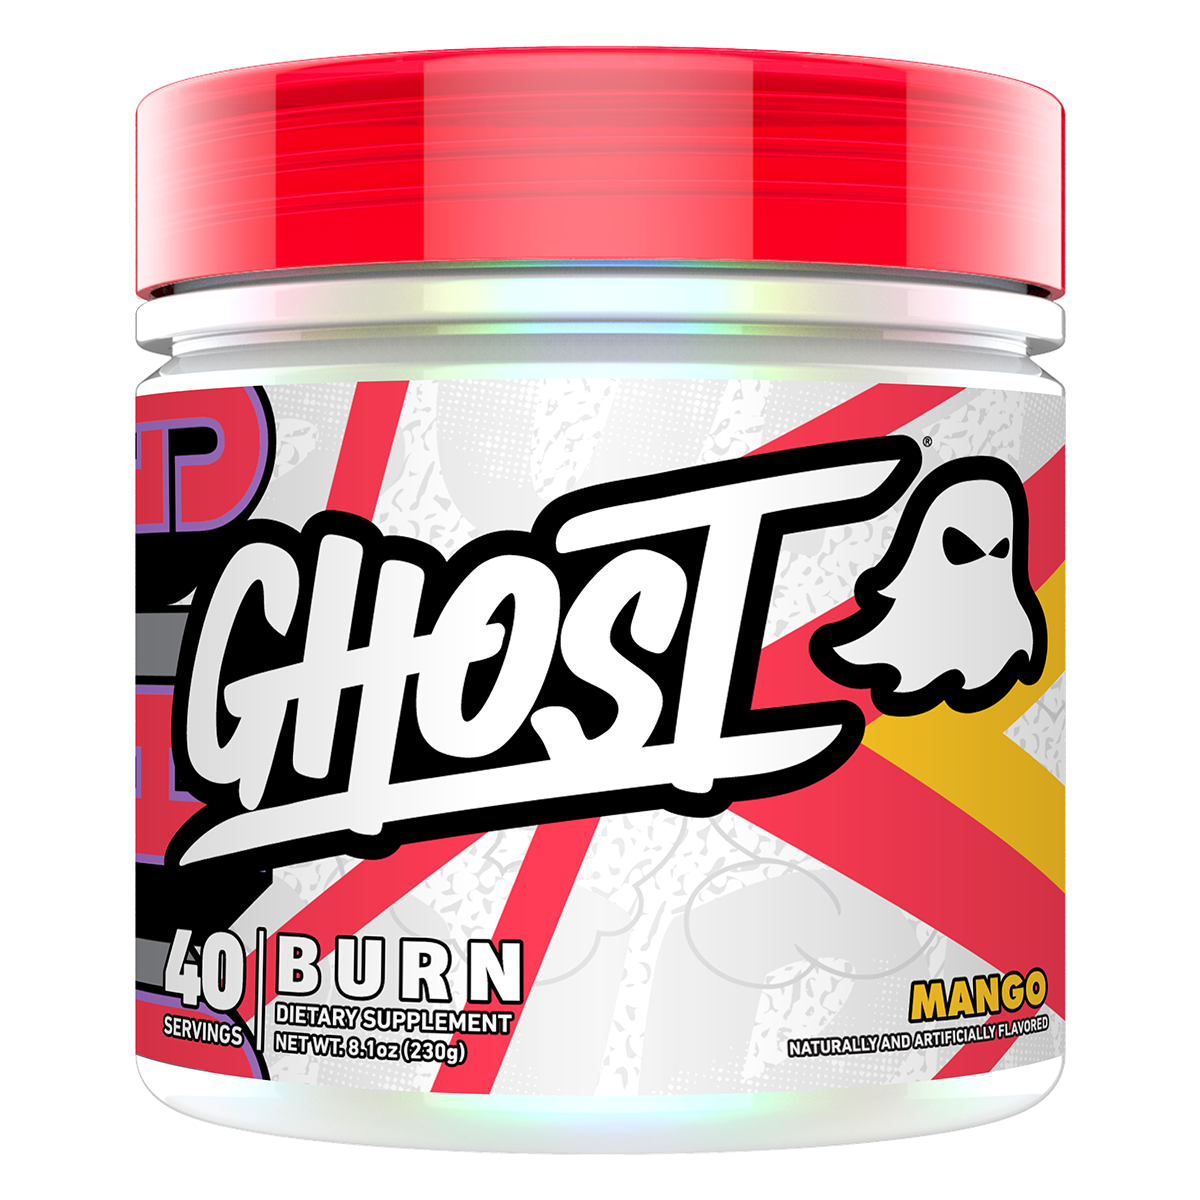 Ghost Burn